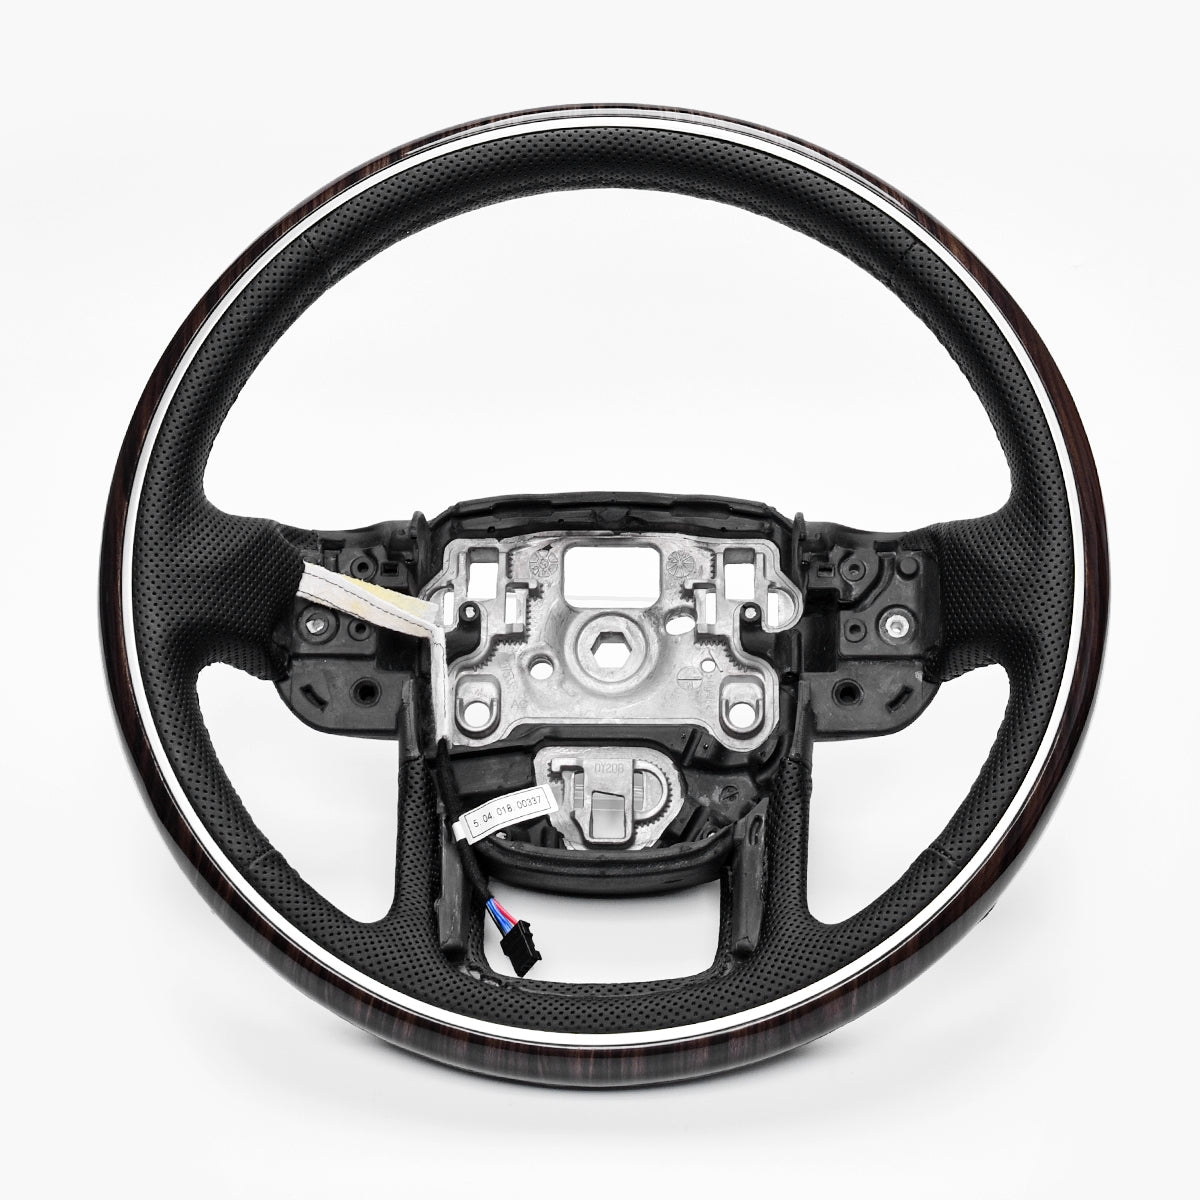 SUPERCHARGED WALNUT WOOD steering wheel Land Rover Range Rover Sport SVR L494 - revolvesteering